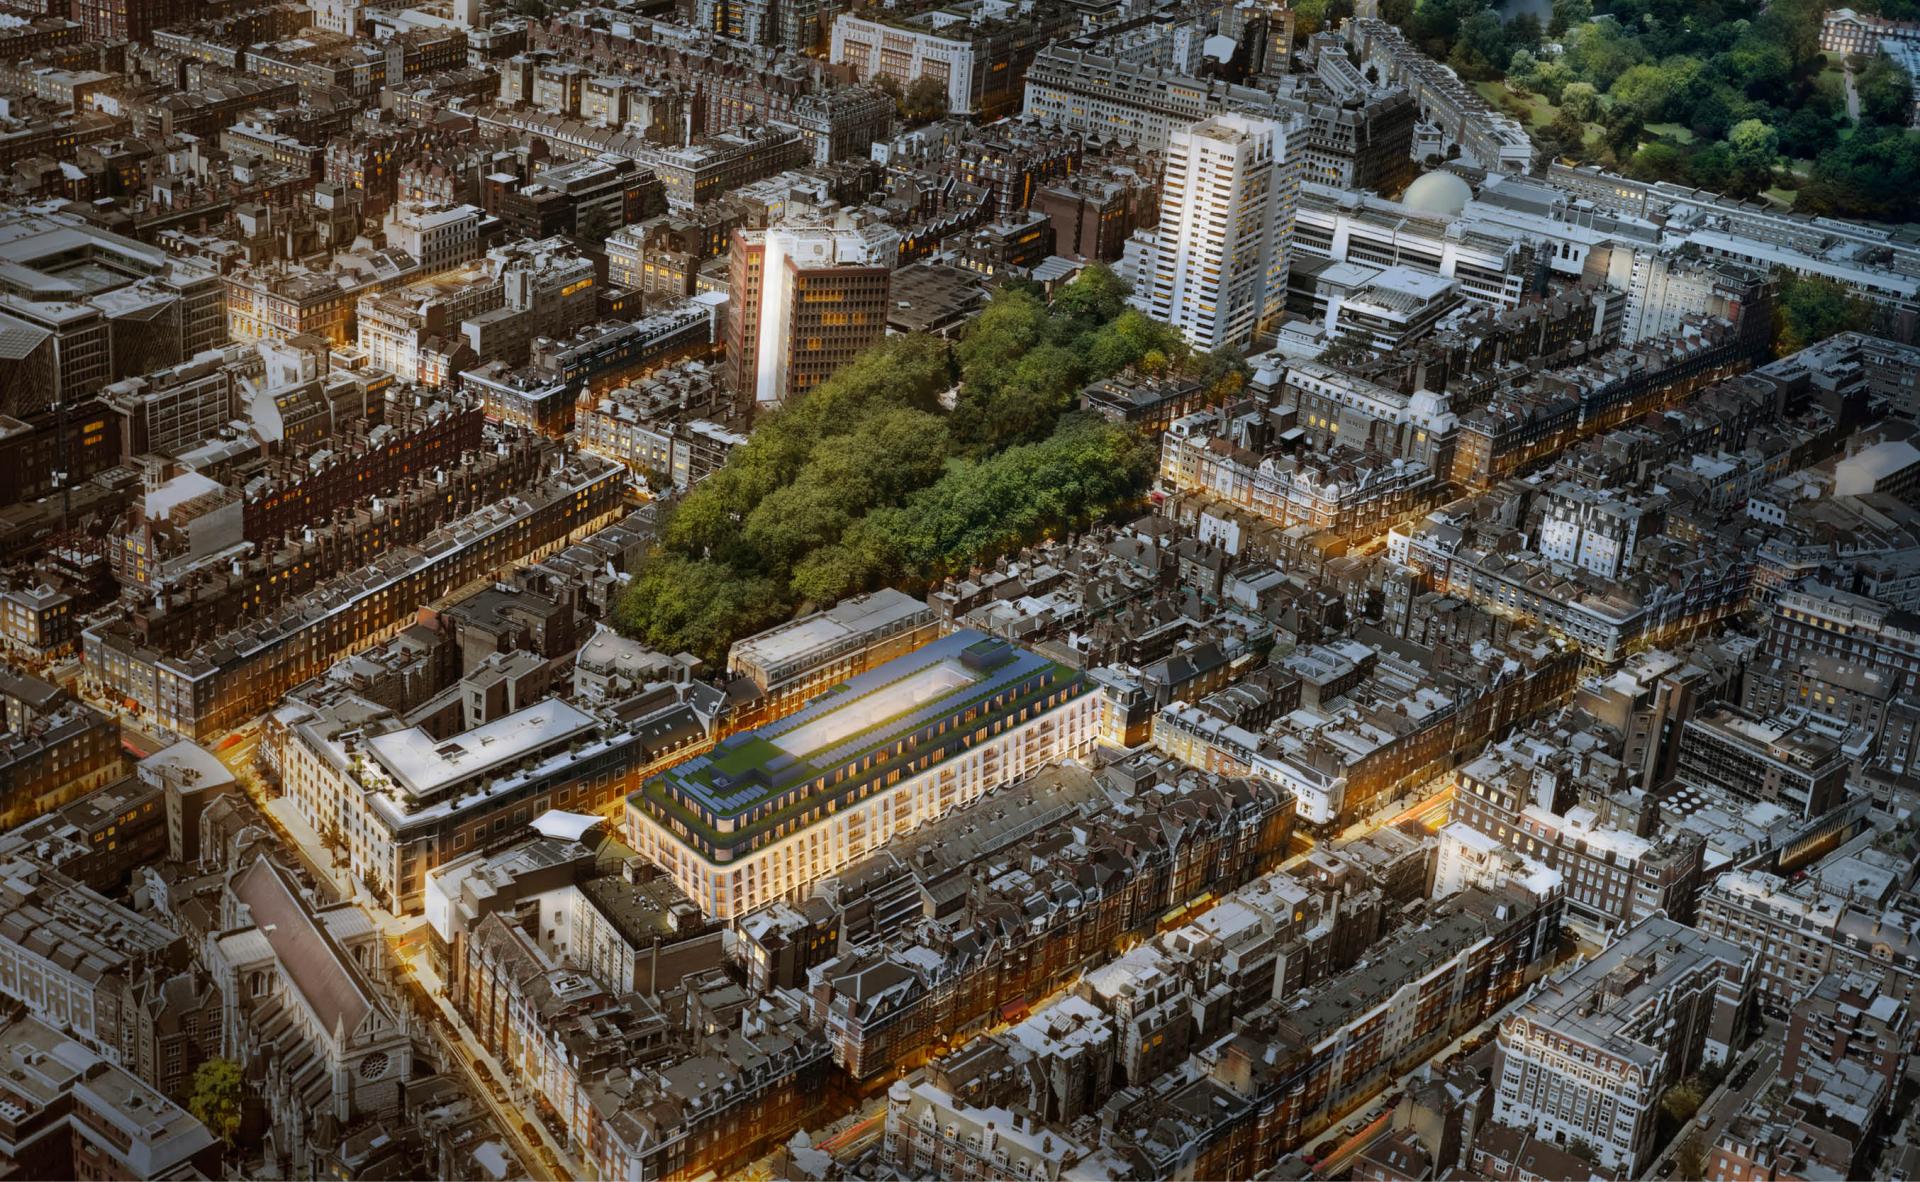 Marylebone Square: A Modern Take on a Traditional London Mansion Block